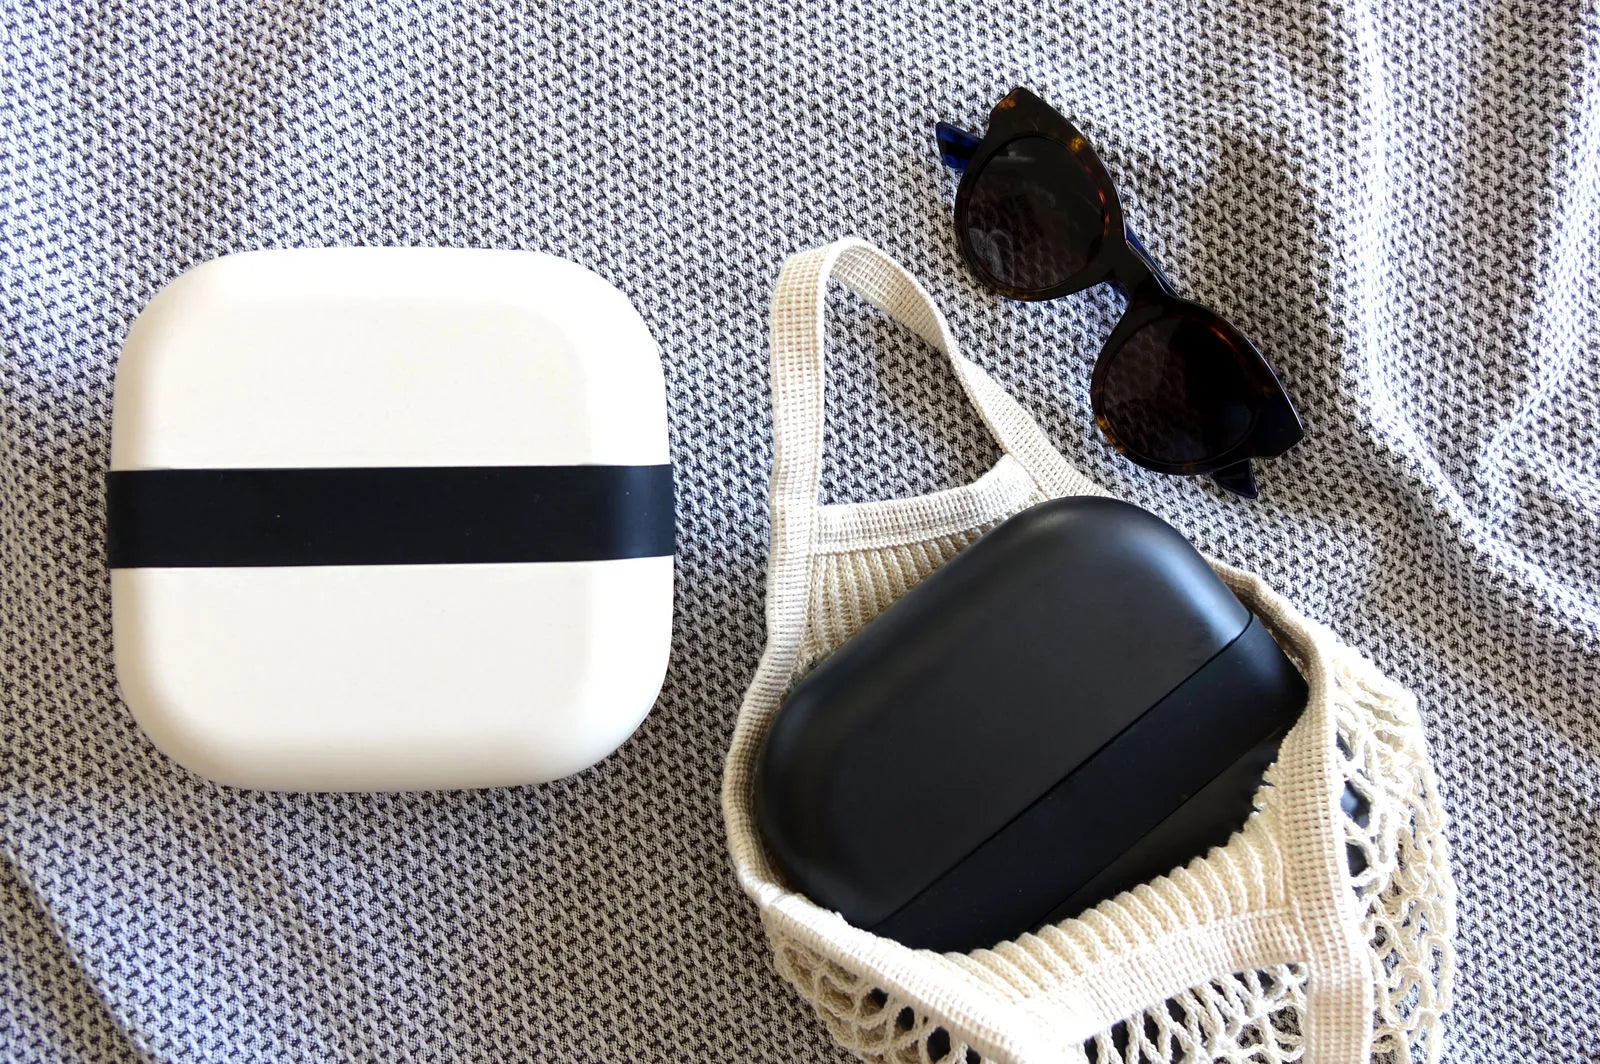 White and black bento boxes next to sunglasses.